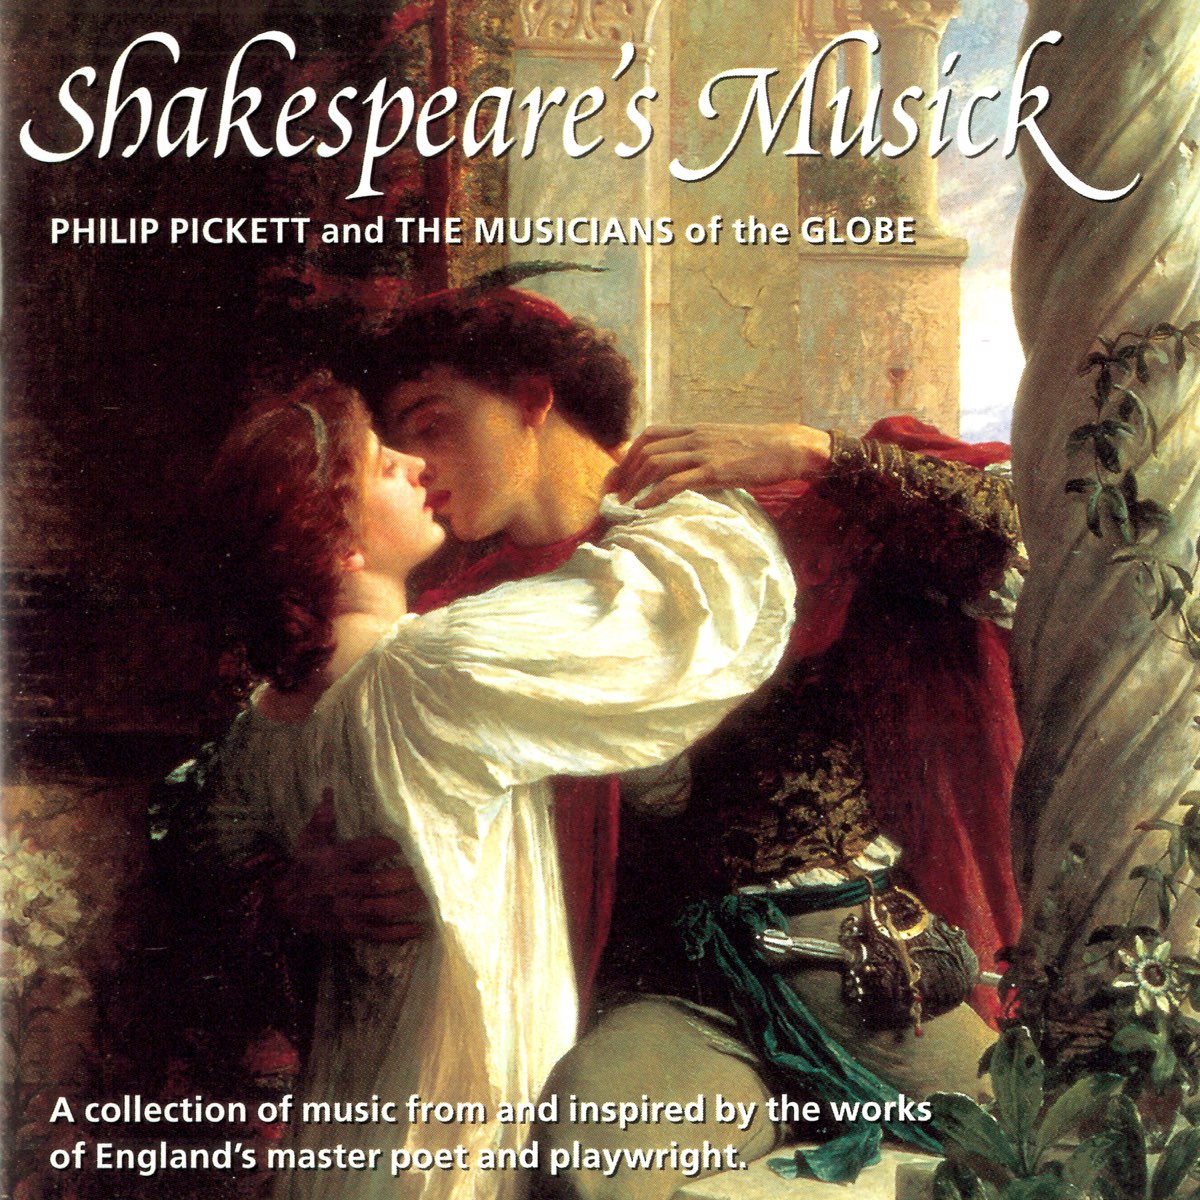 Shakespeare's Musick - Album by Musicians of The Globe & Philip